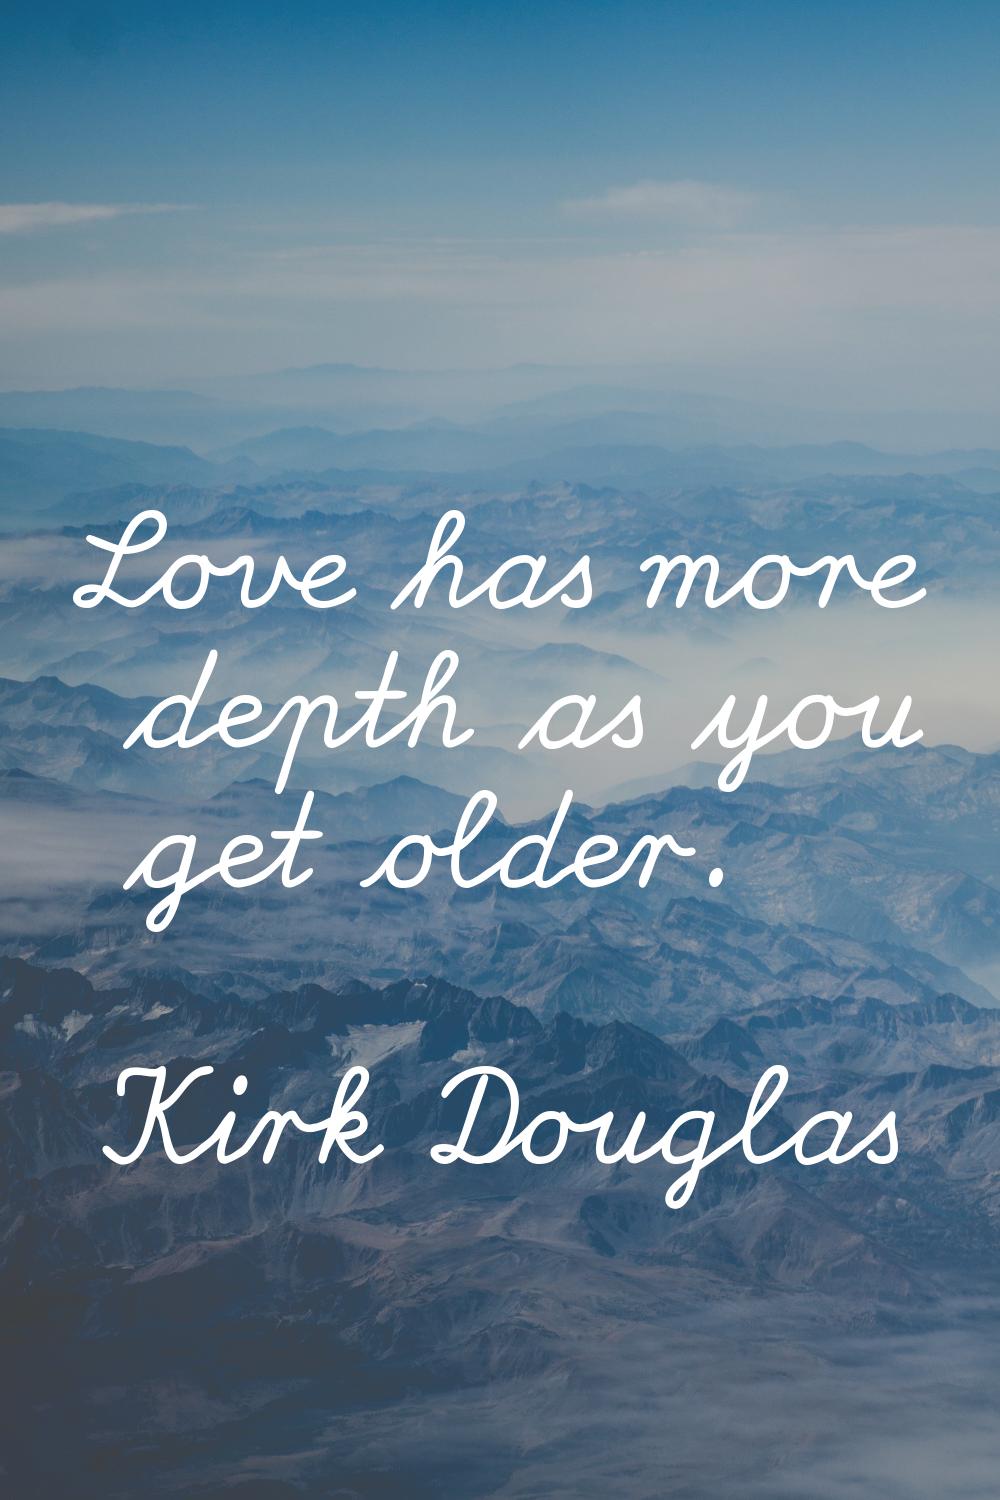 Love has more depth as you get older.